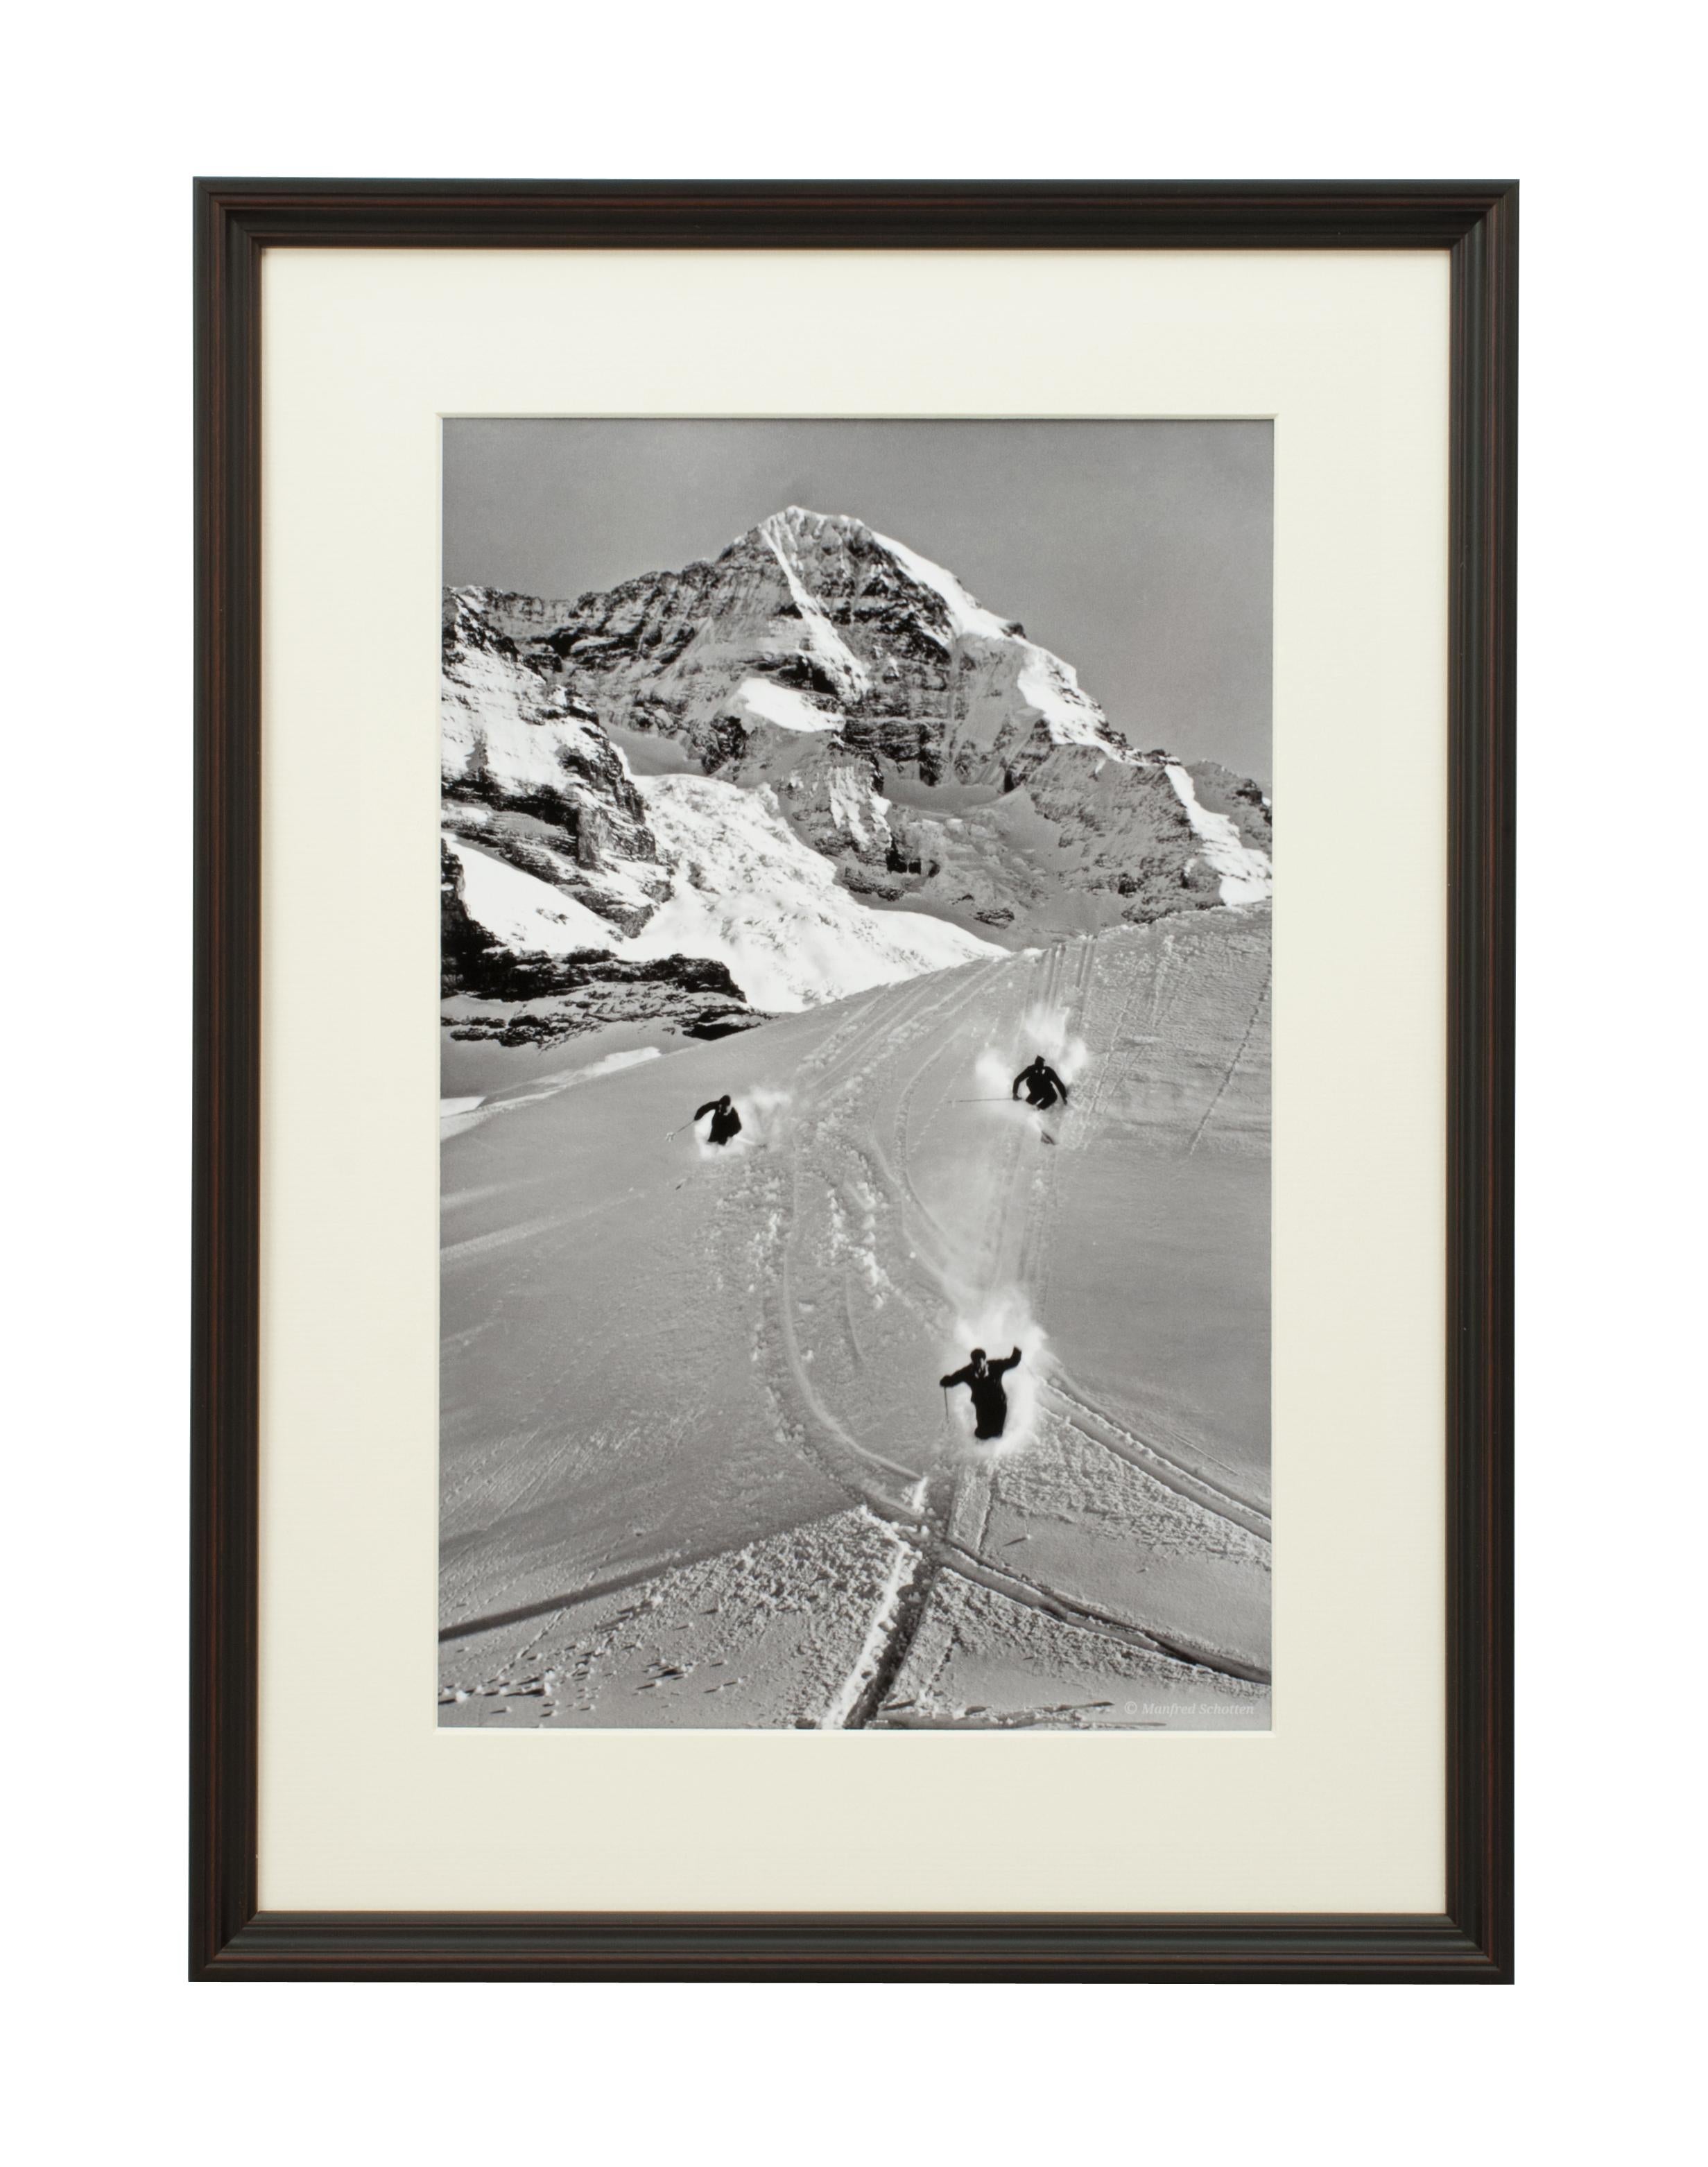 Photographie de ski de style vintage, photographie de ski alpin encadrée, Scheidegg.
sCHEIDEGG